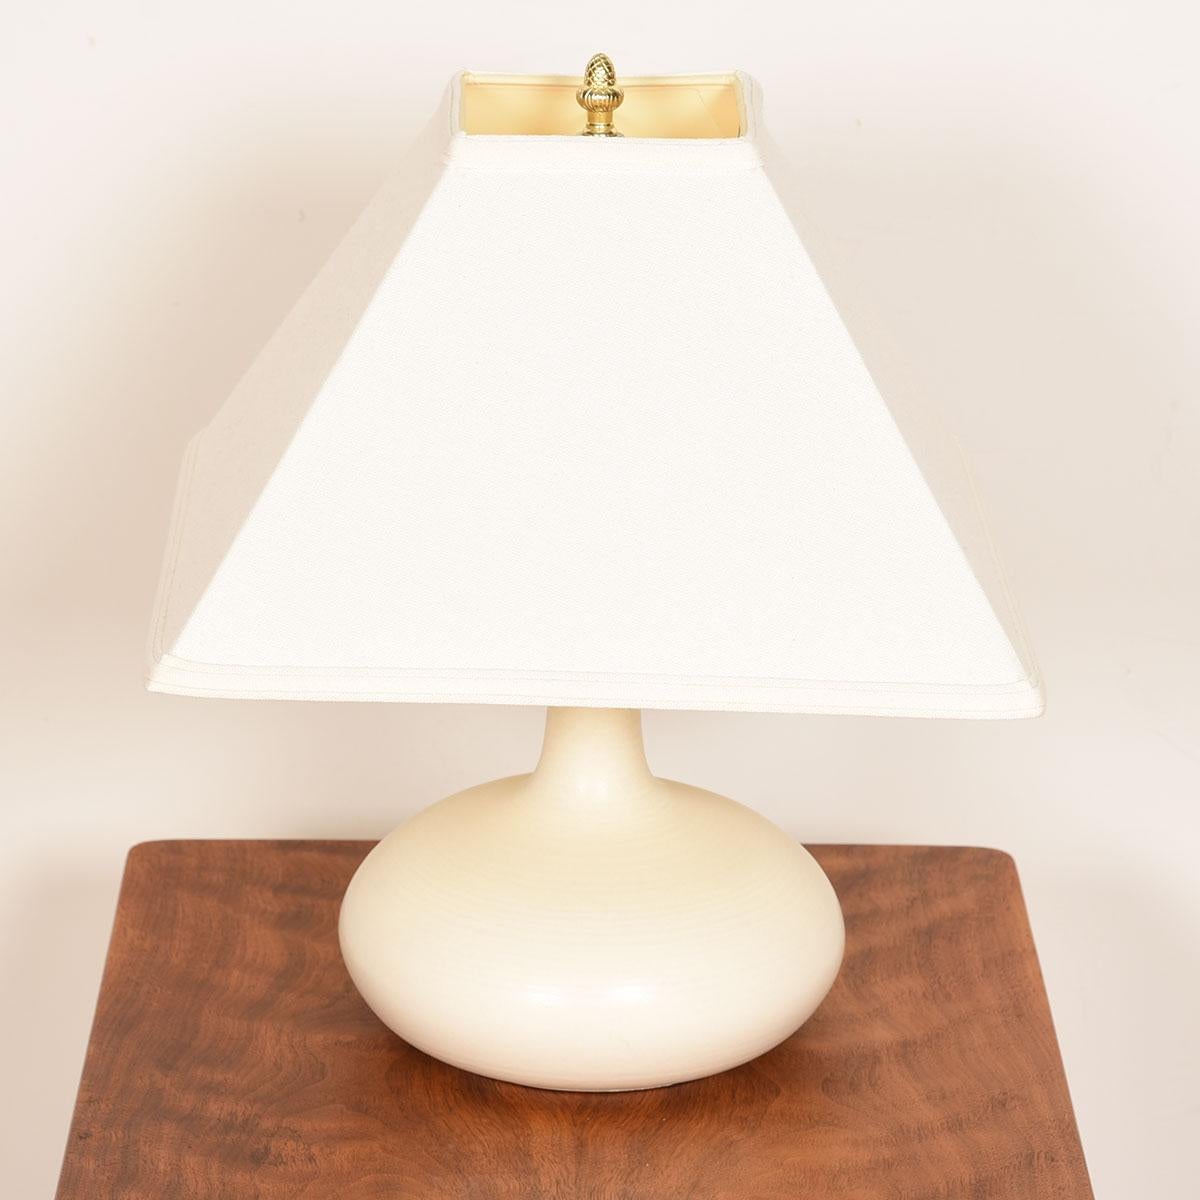 Glazed Small Round Bostlund Table Lamp by Lotte & Gunnar Bostlund For Sale